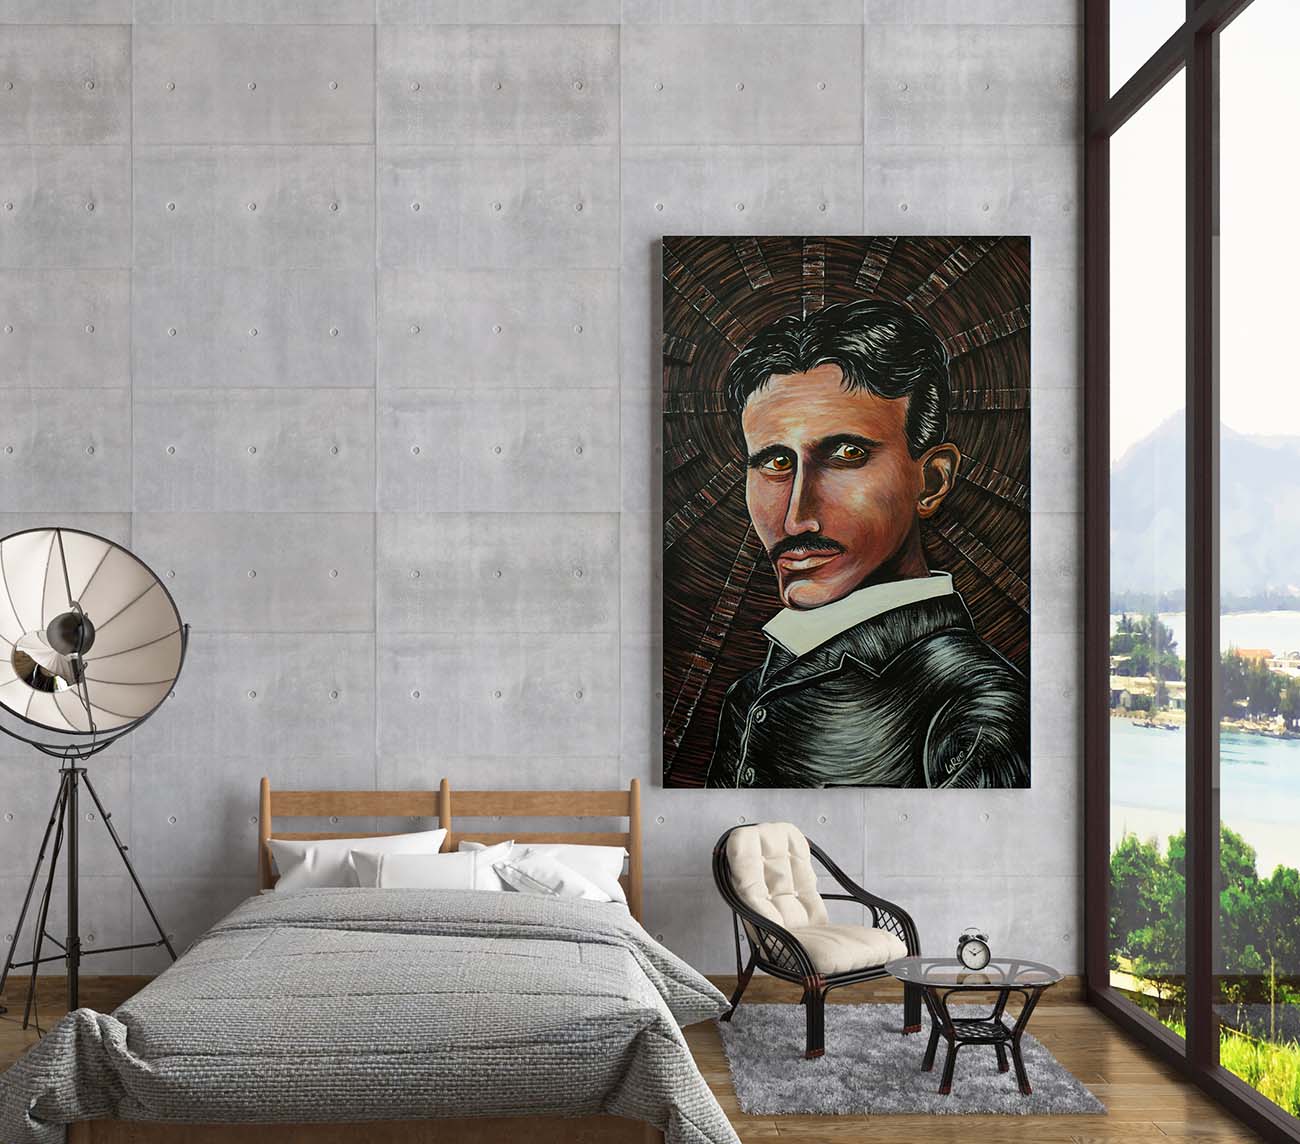 Nikola Tesla portrait painting by Doug LaRue on a wall in a lakeside home